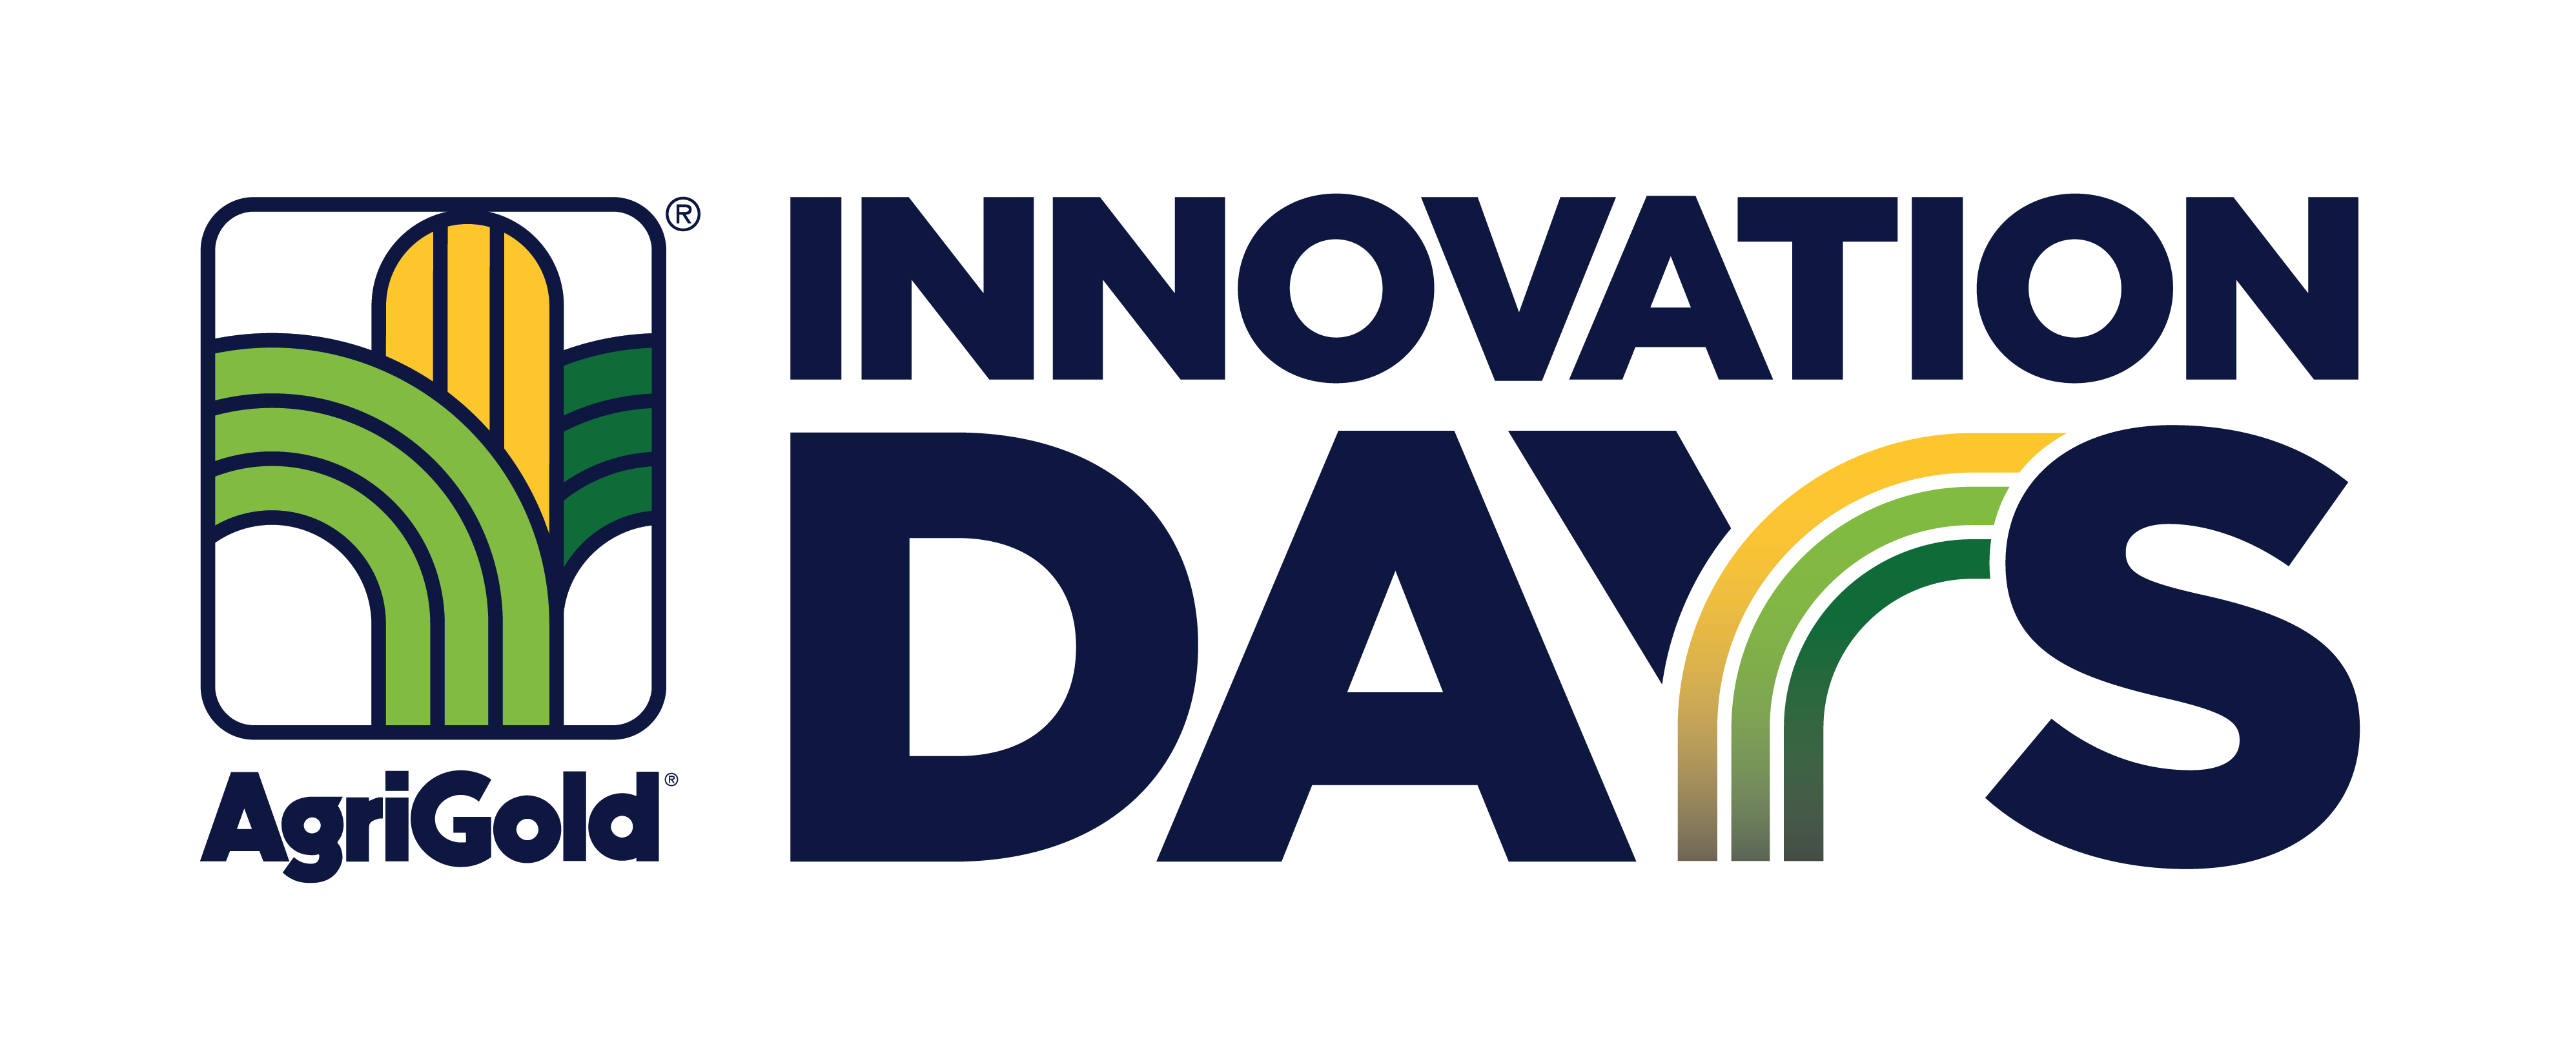 AgriGold Innovation Days